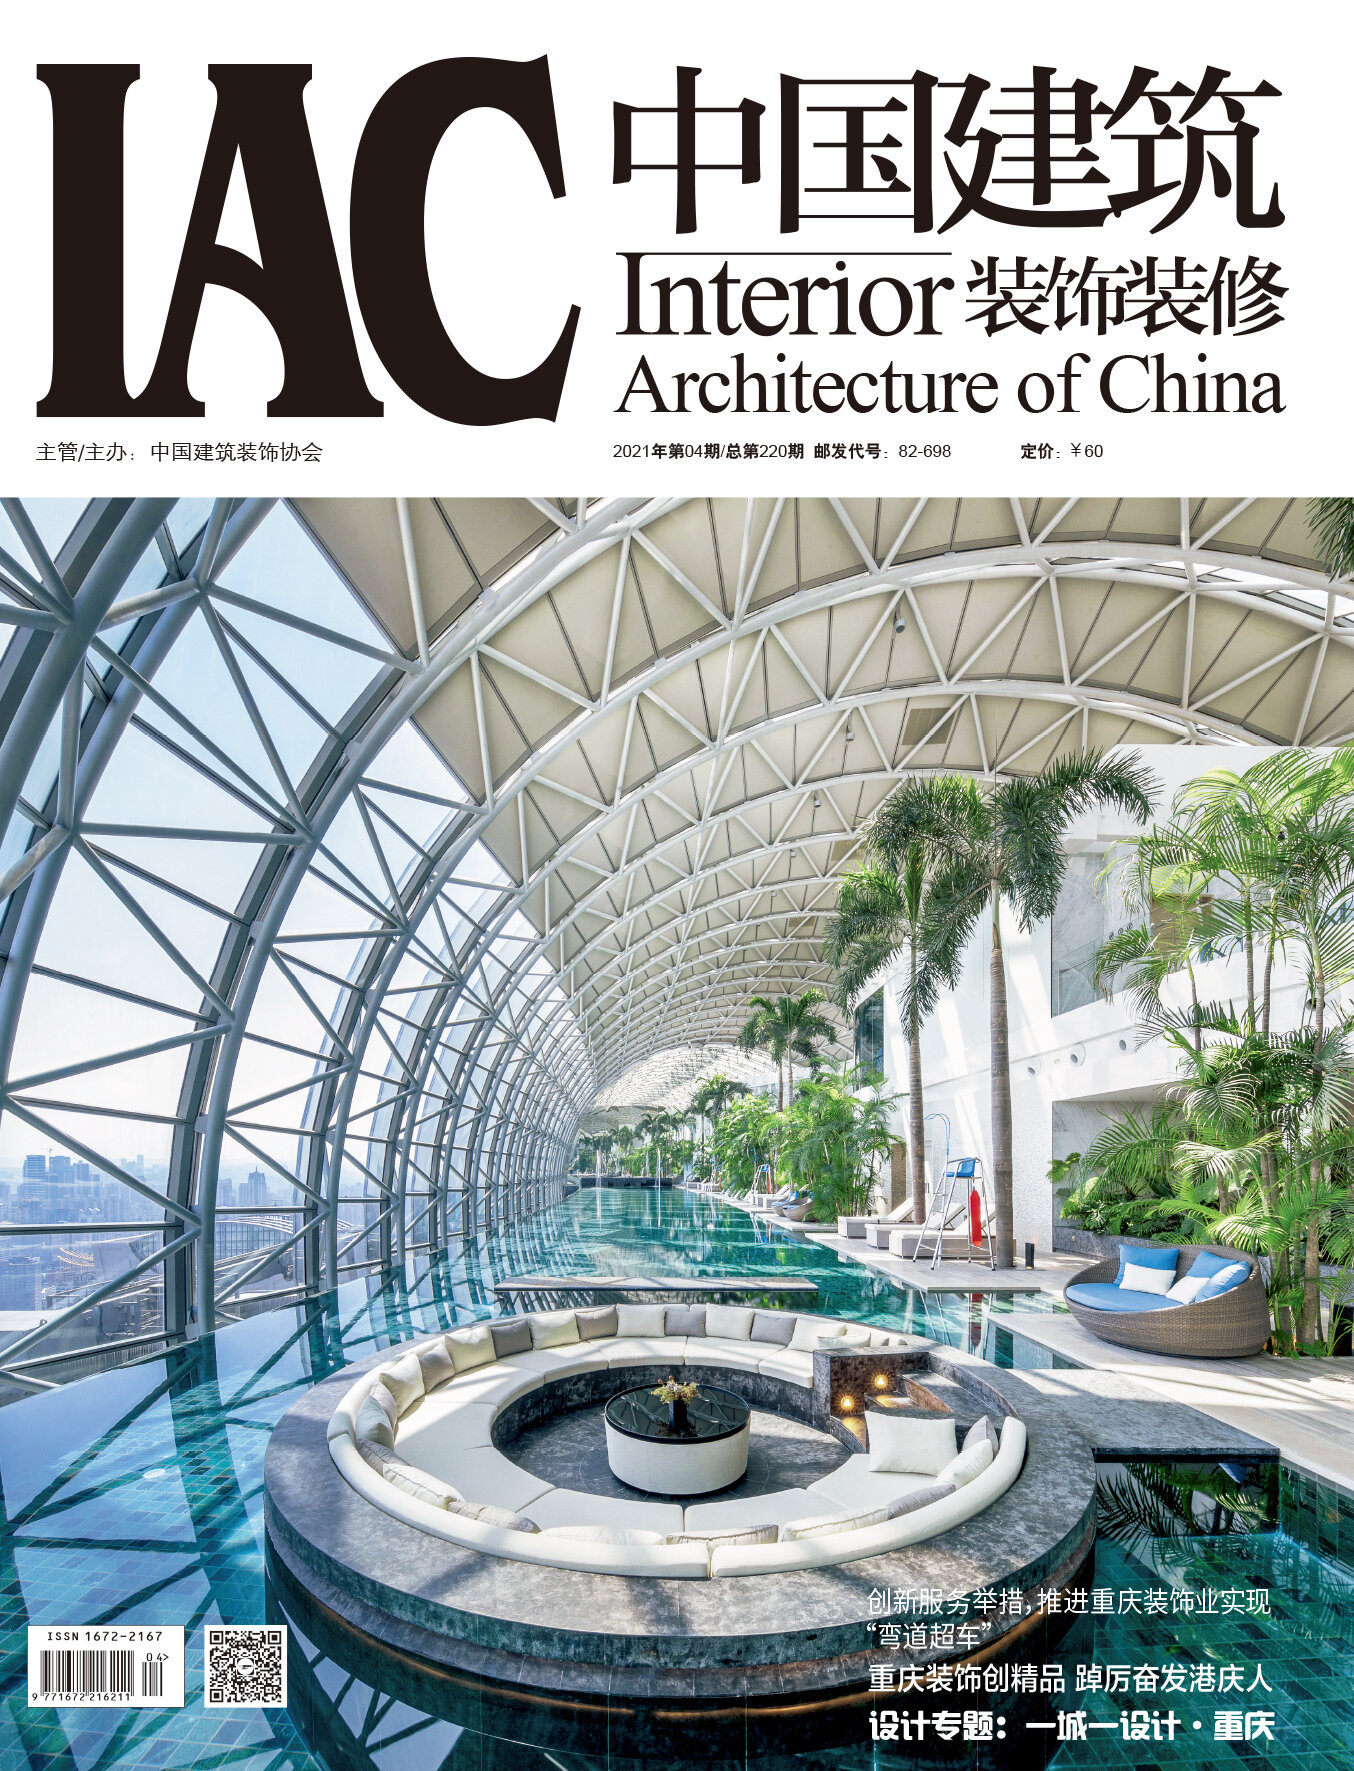 IAC Interior Architecture of China 中國建築裝飾裝修_2021年第4期_Cover.jpg